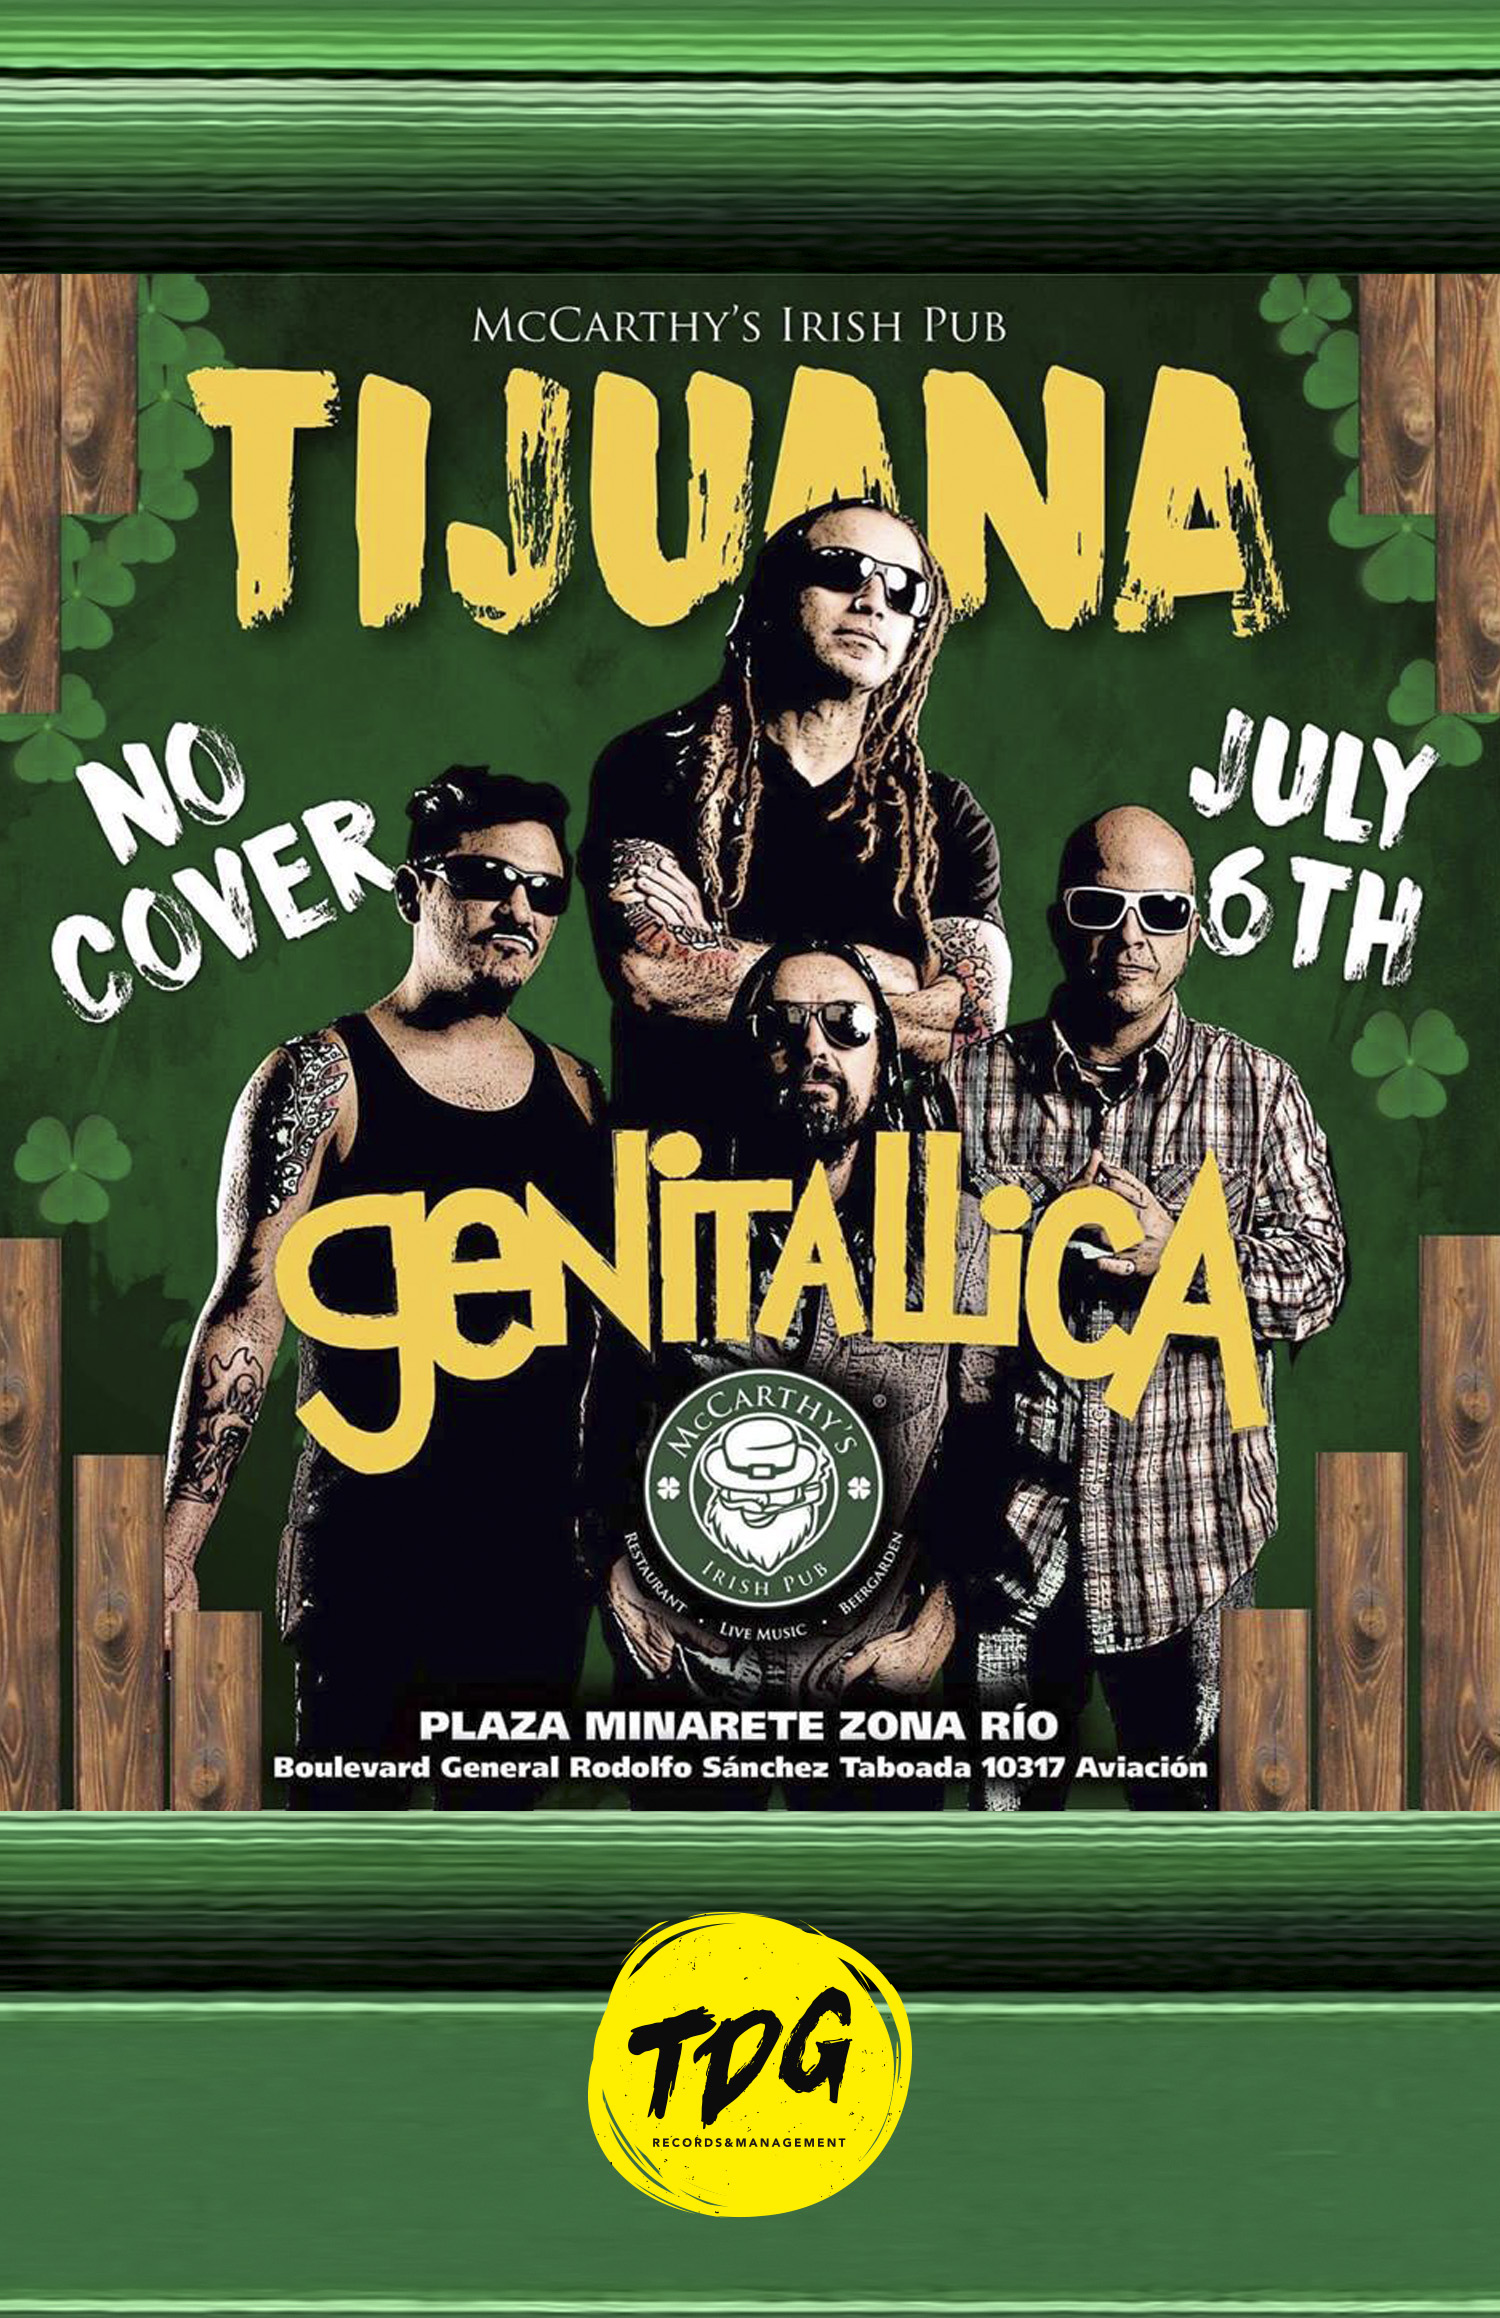 Genitallica @ McCarthy’s Tijuana